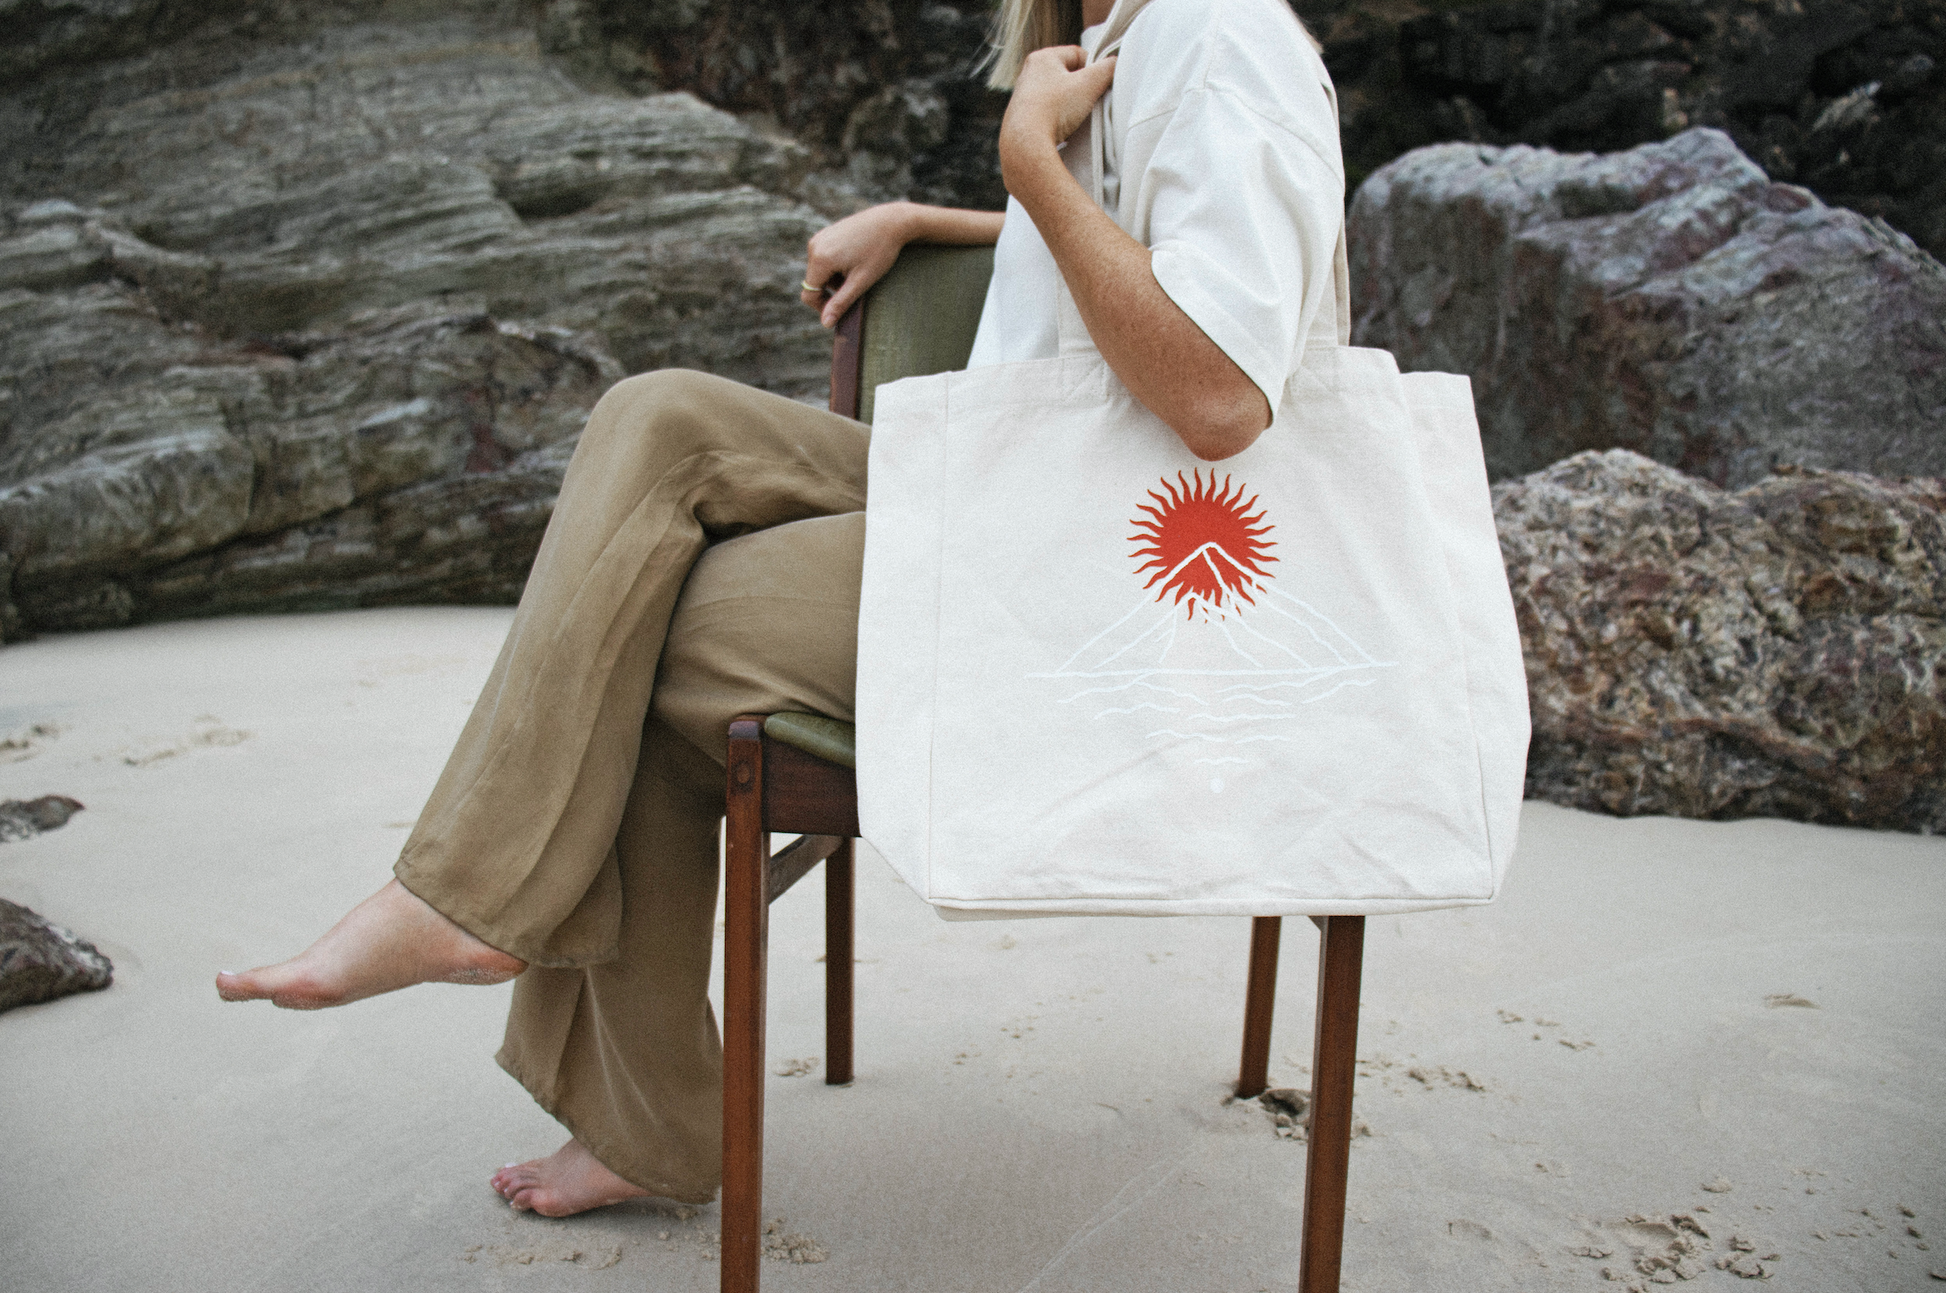 A3 Cotton Canvas Tote Bag w/ Inner Pocket (12oz)